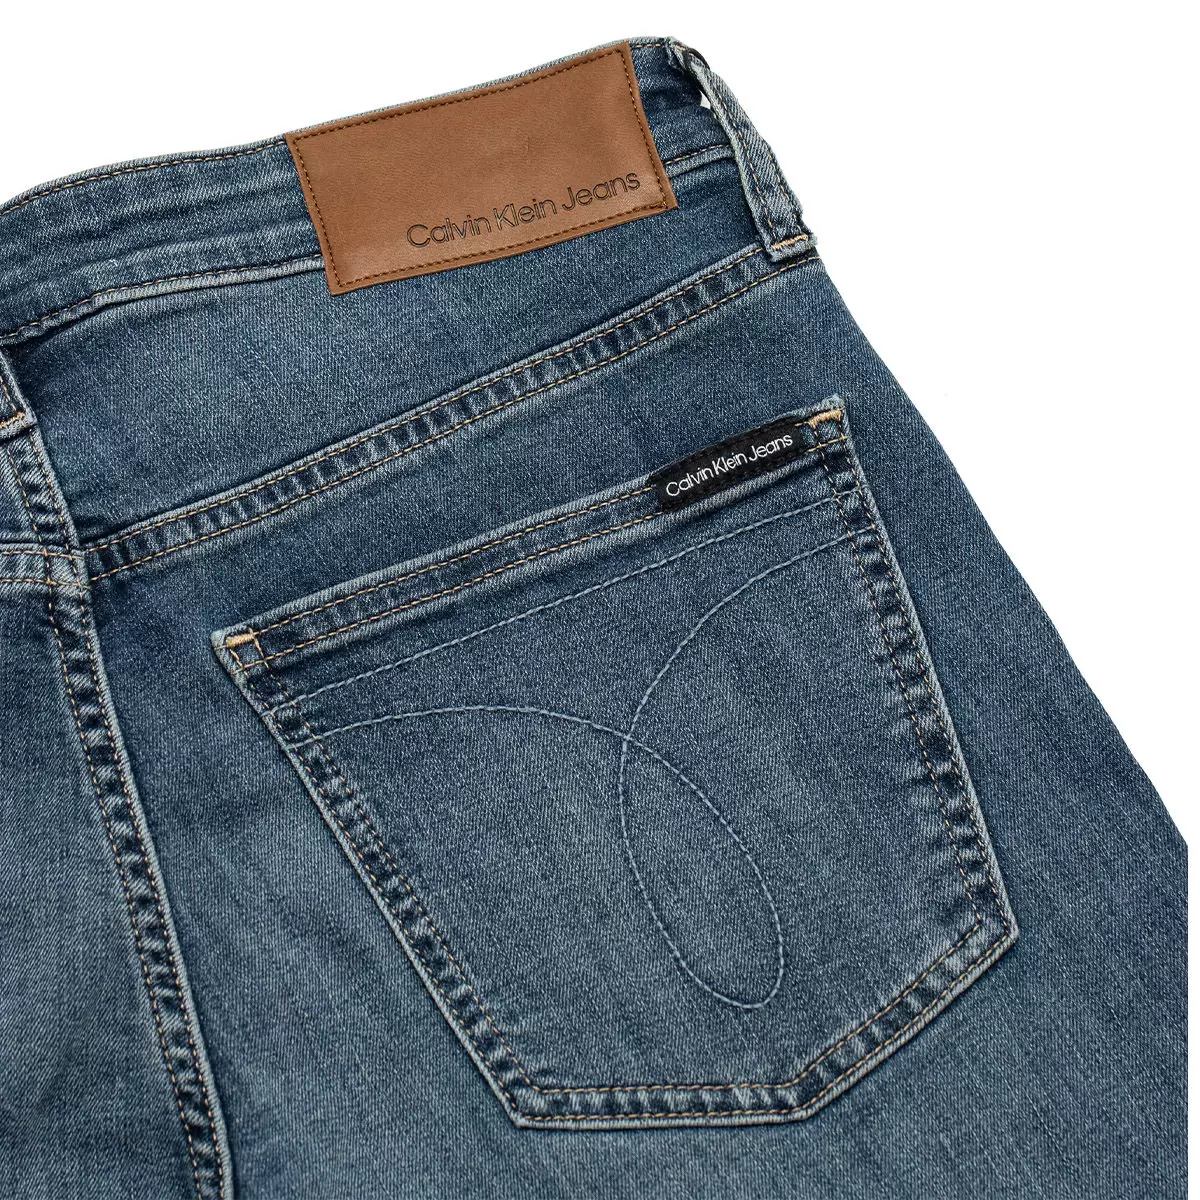 Calvin Klein Jeans 男彈性修身牛仔褲 腰圍 33吋 X 褲長 30吋